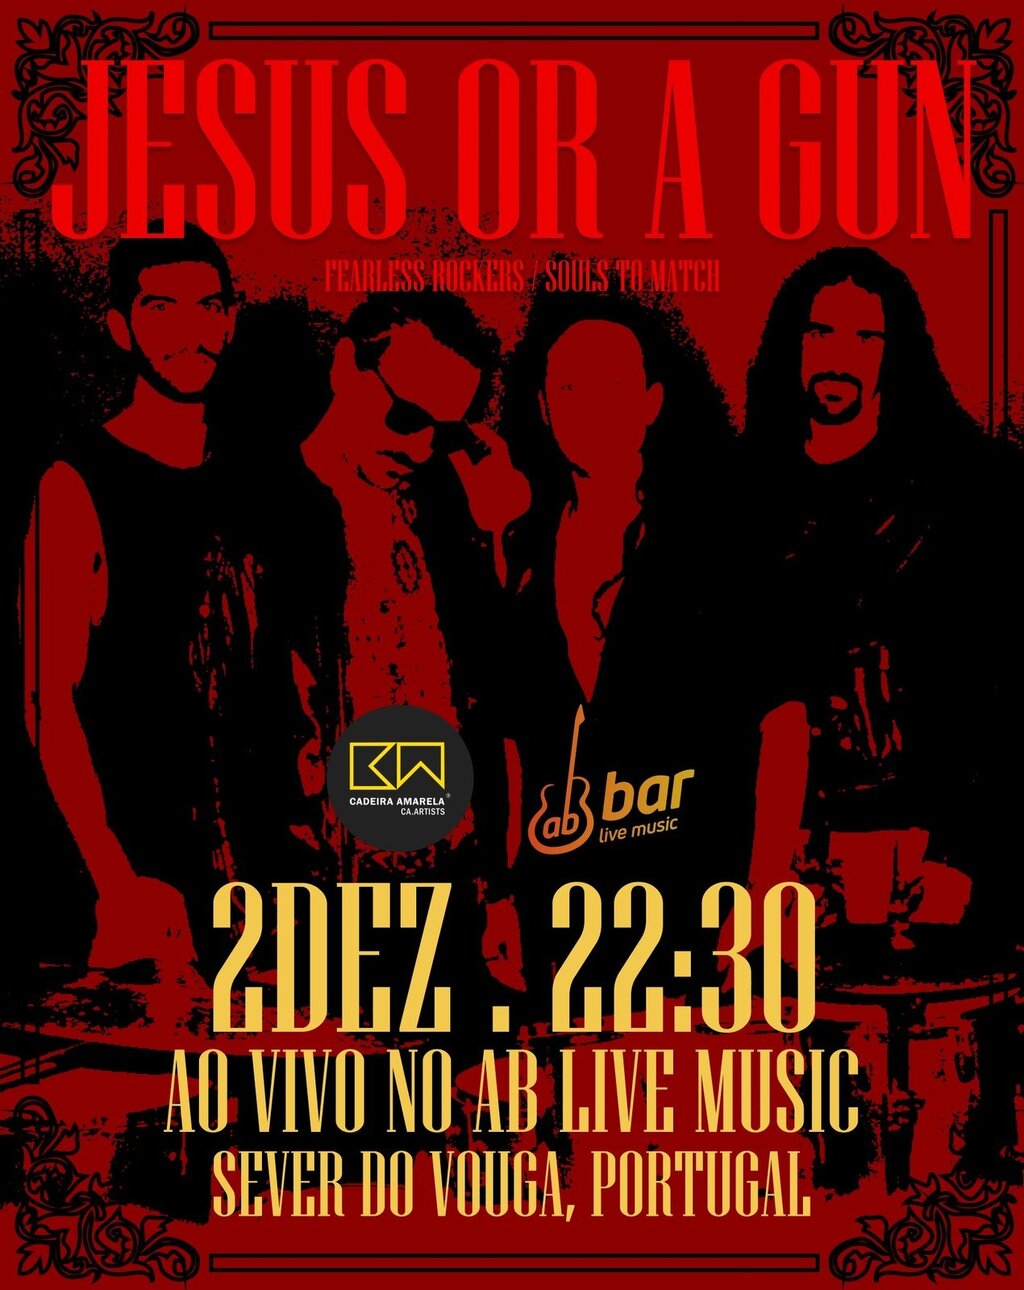 2 dez - AB Bar Live Music - Musica ao Vivo - Jesus or a Gun